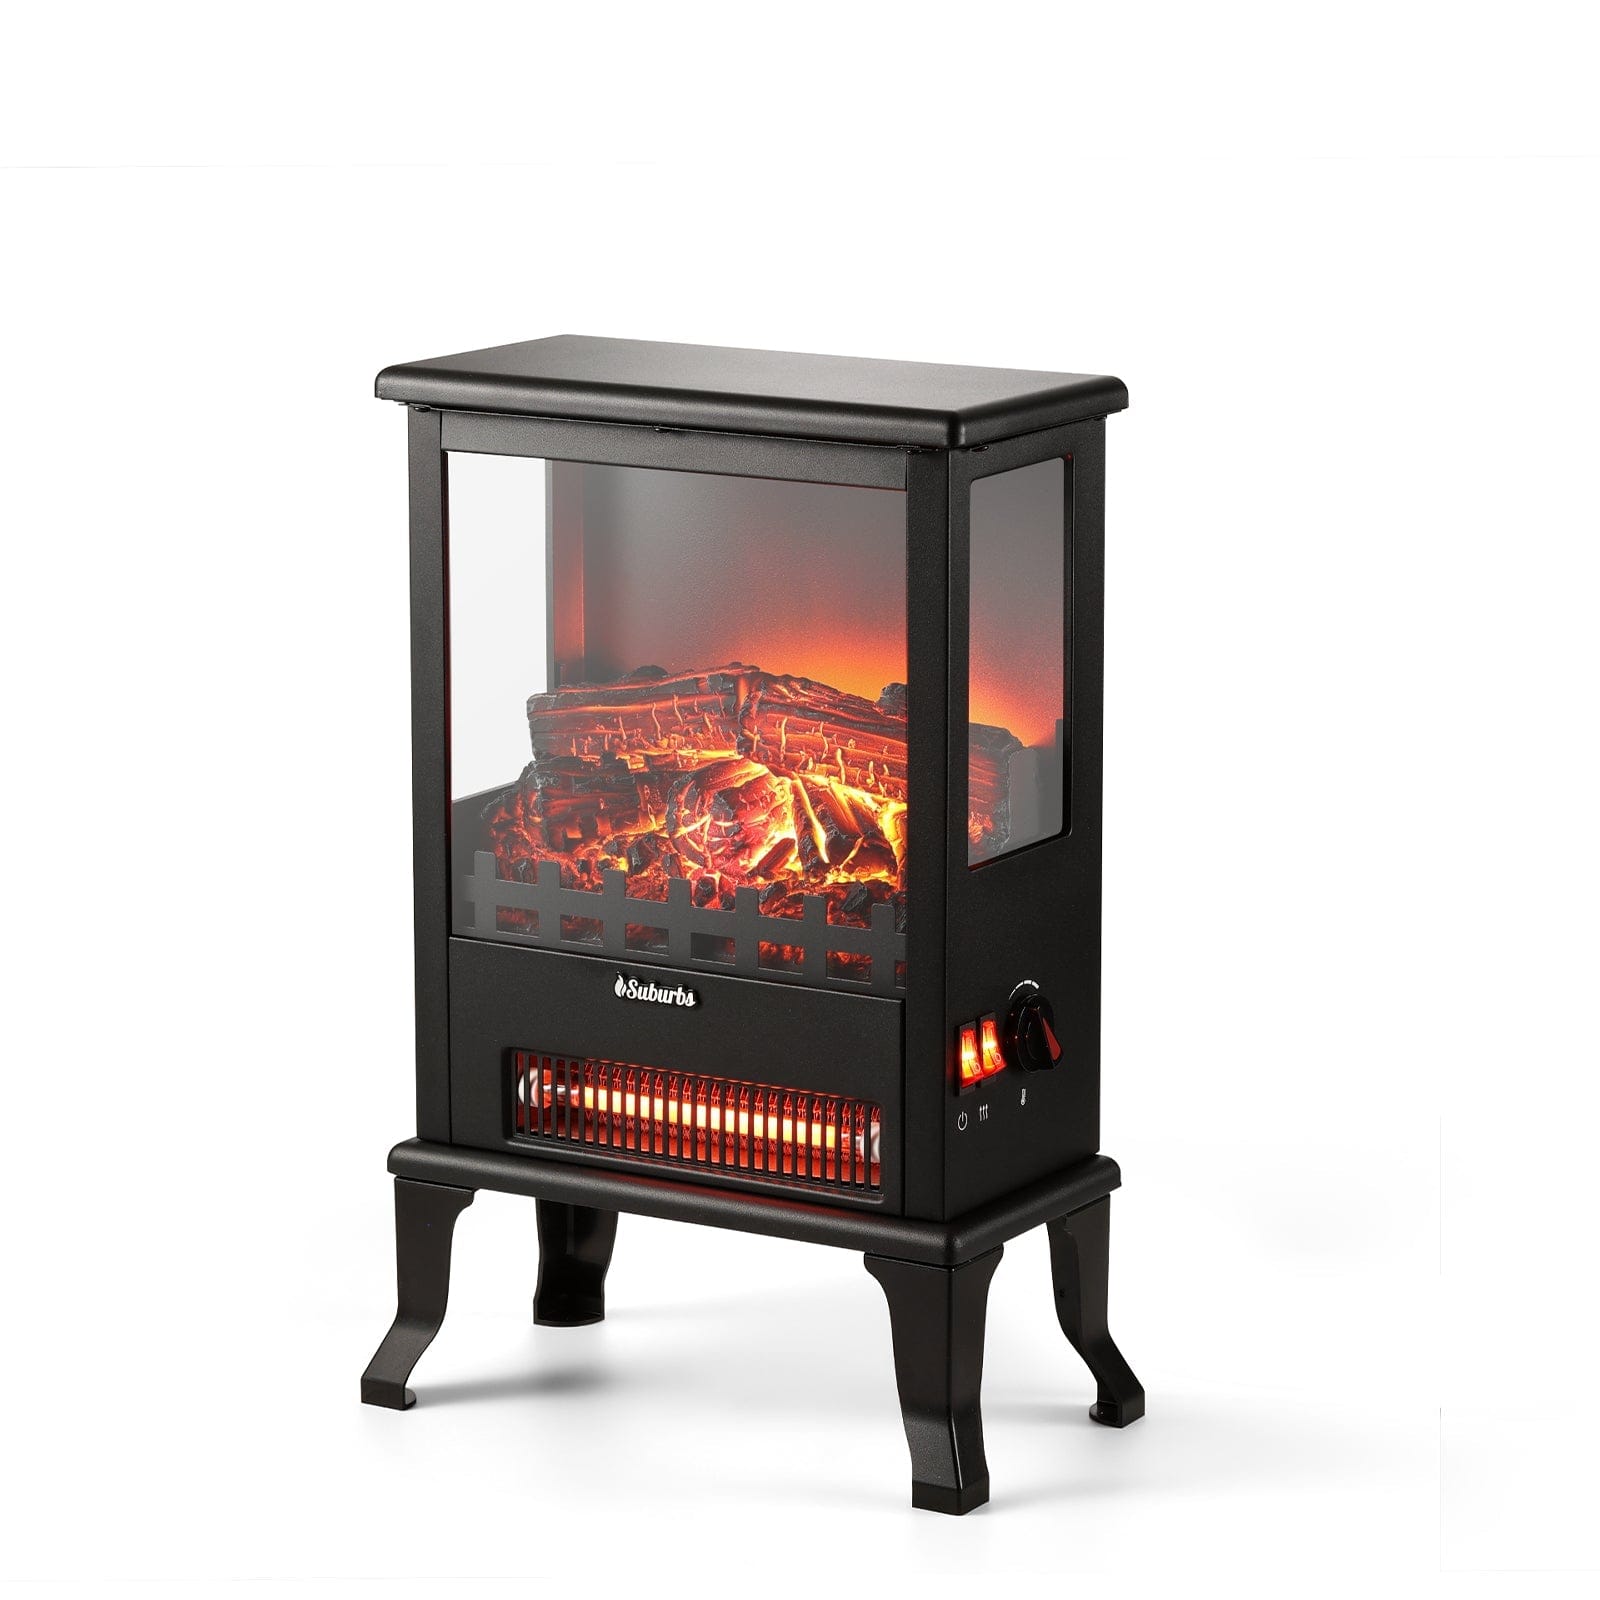 TURBRO Suburbs TS17Q Electric Fireplace Stove Heater Electric Fireplace Stove Black